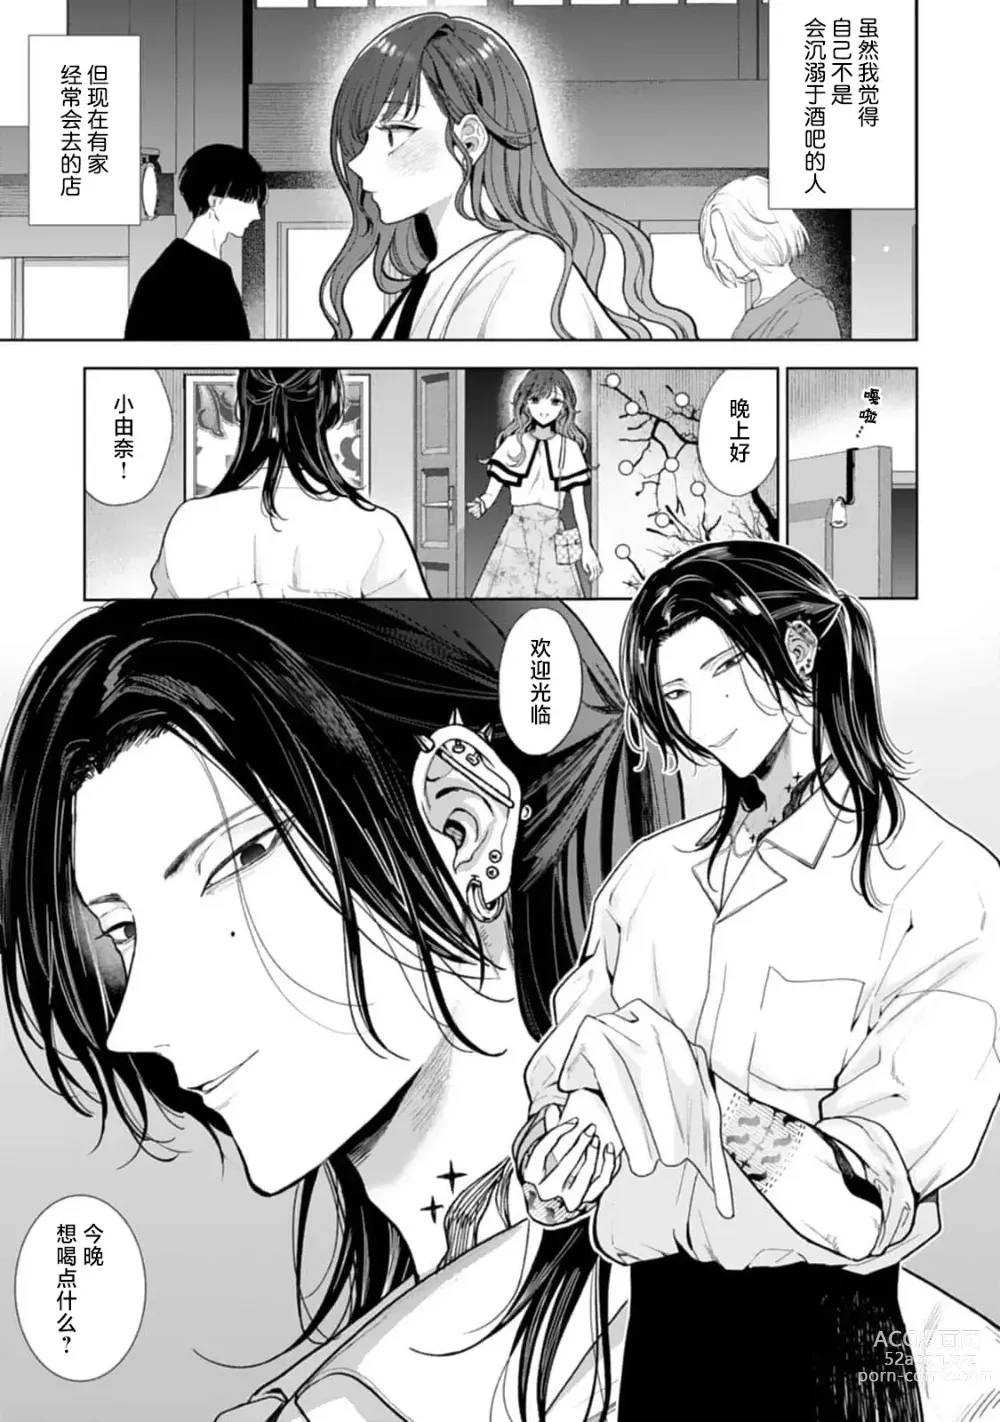 Page 2 of manga 执爱螺旋线